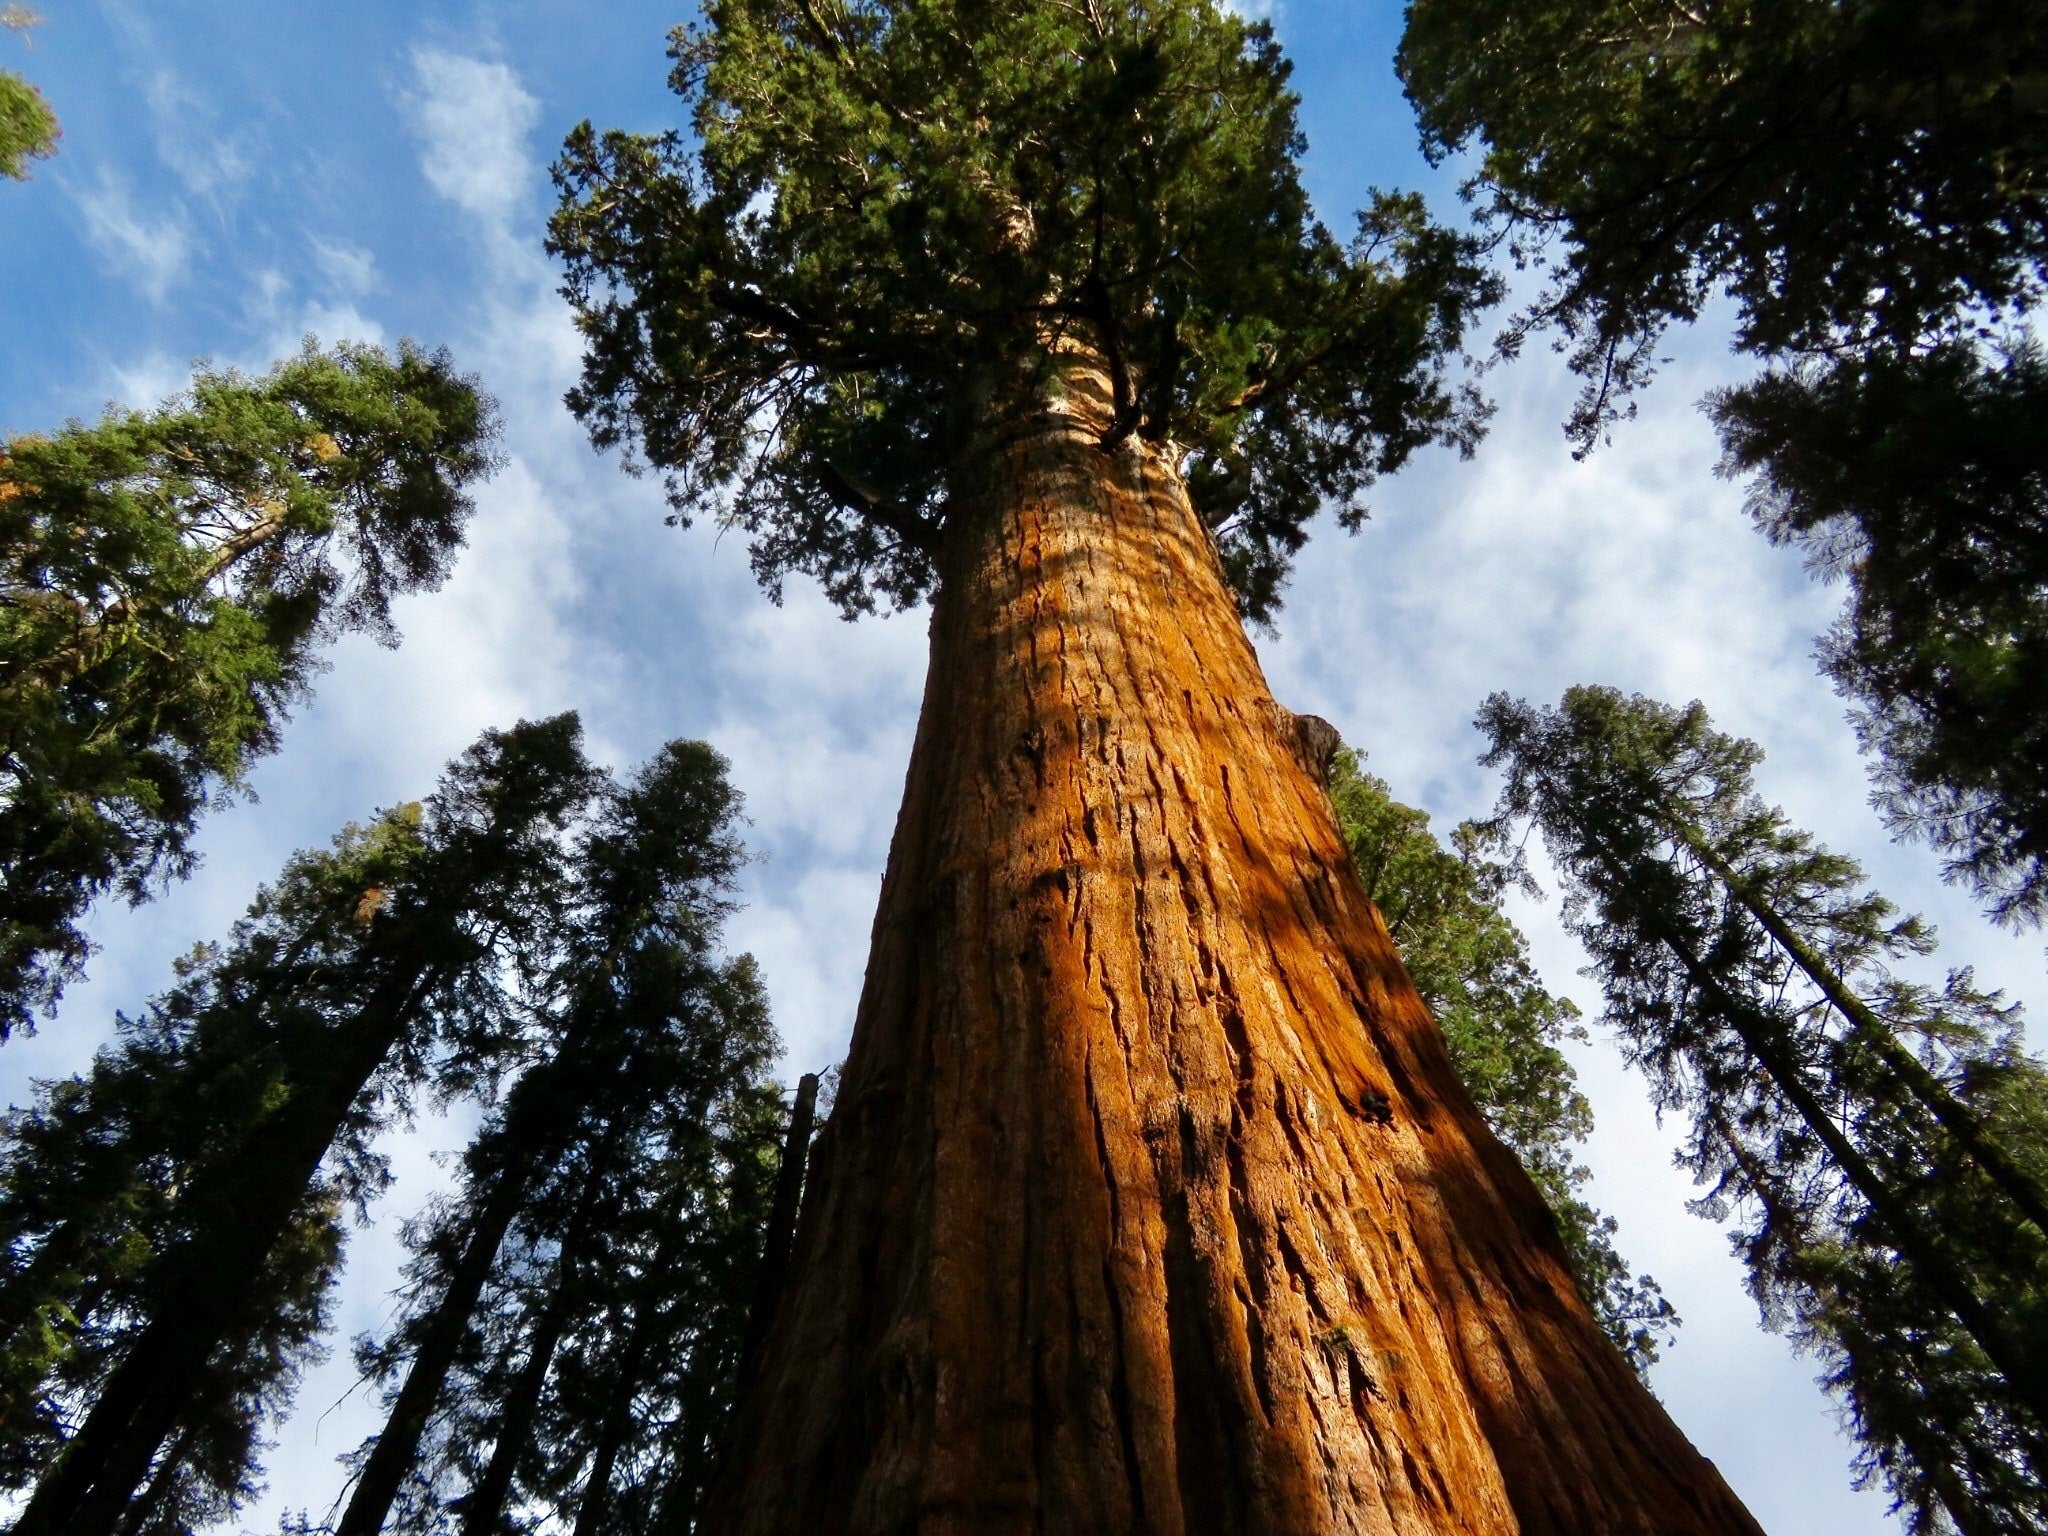 Giant Sequoia Redwood Tree Seeds | Redwood Tree Seeds | Giant Sequoia Tree Seeds | Sequoiadendron giganteum Seeds | Sierra Redwood Seeds